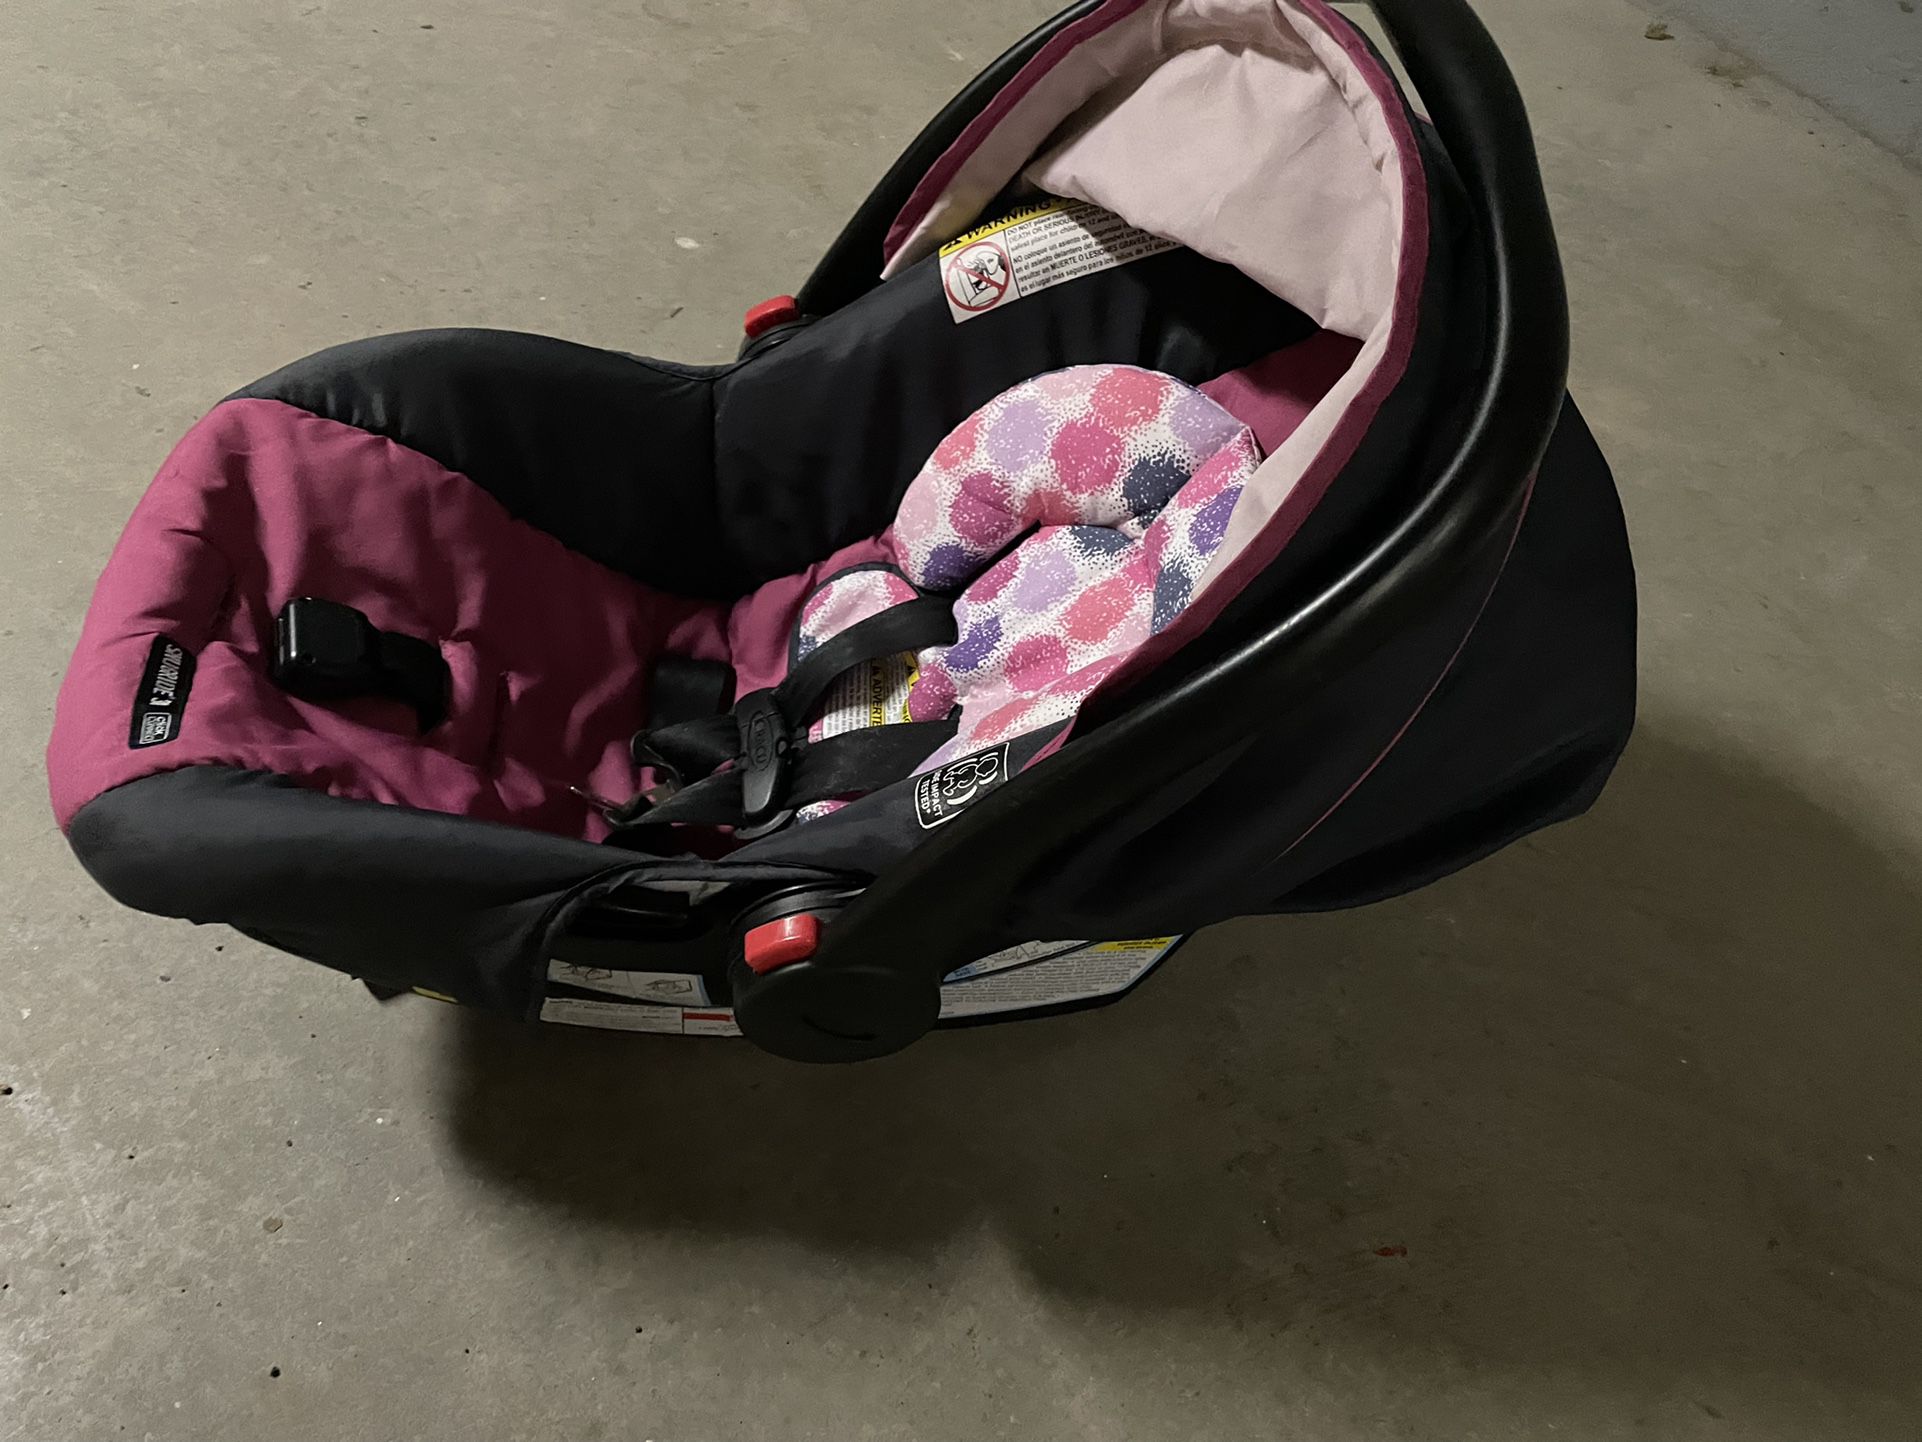 Graco Infant Car seat 